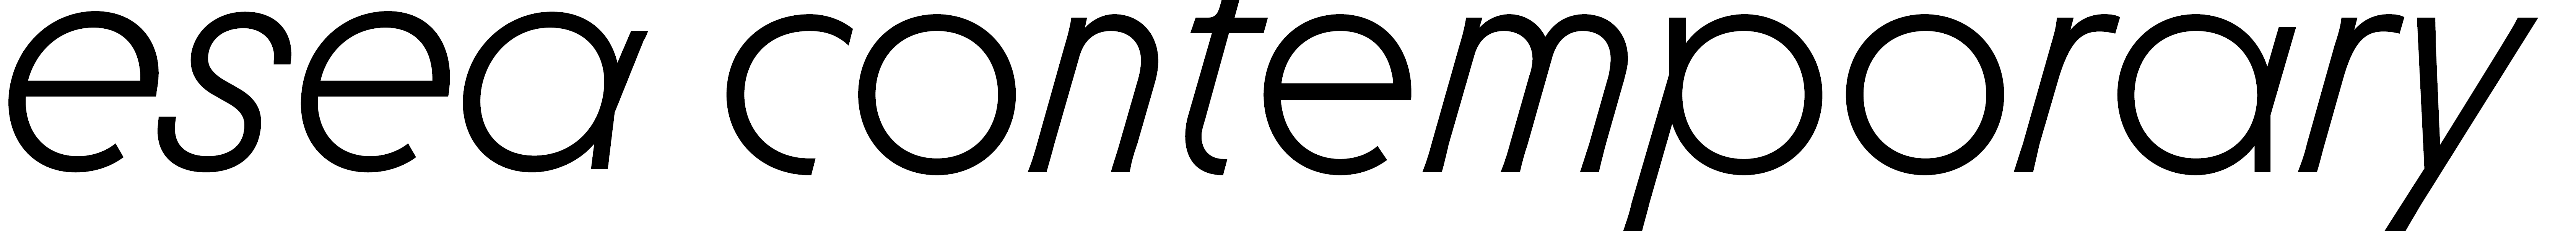 esea contemporary logo